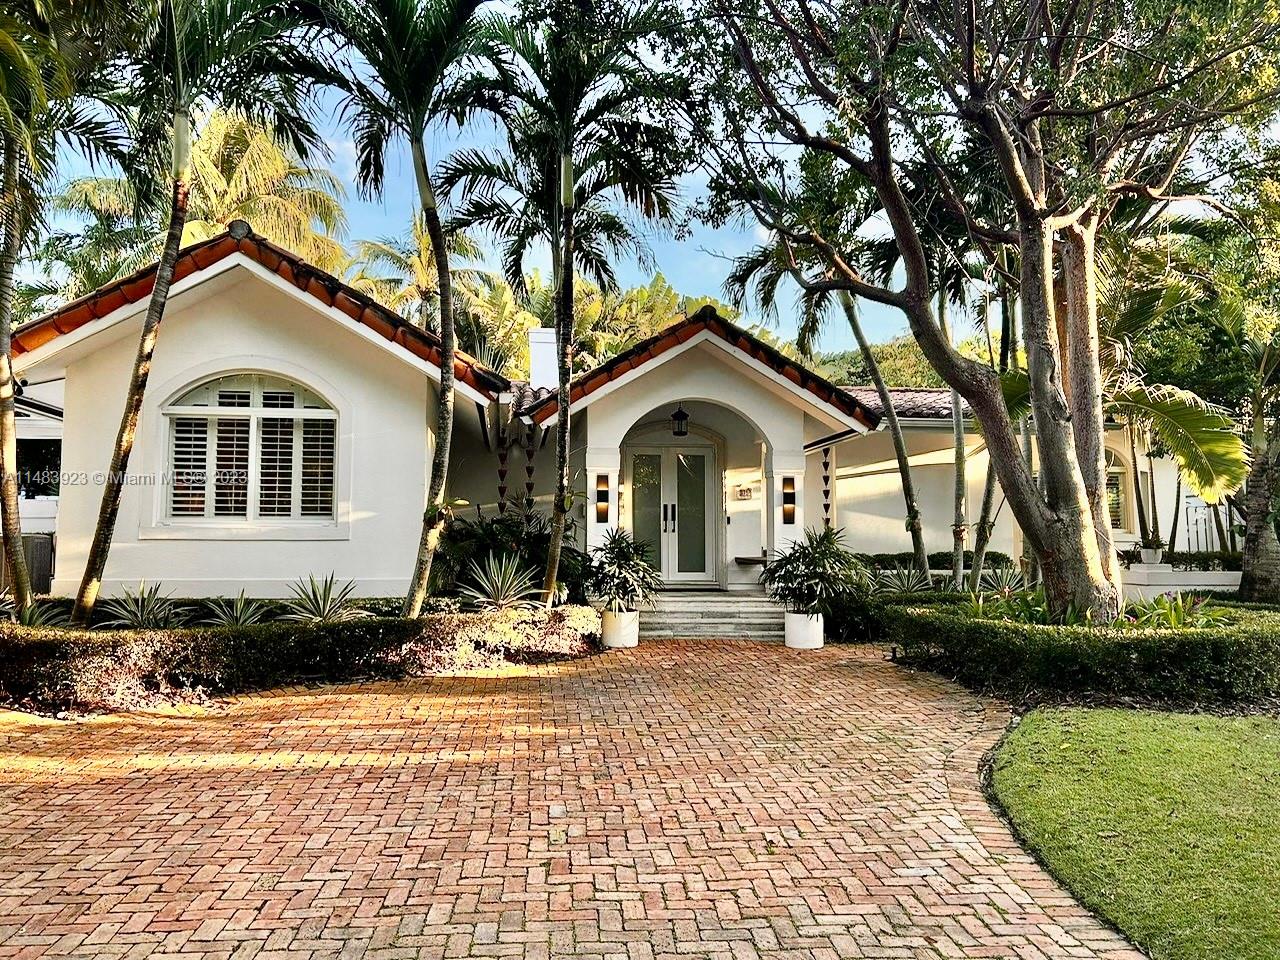 Rental Property at 375 Harbor Ct Ct, Key Biscayne, Miami-Dade County, Florida - Bedrooms: 5 
Bathrooms: 4  - $23,000 MO.